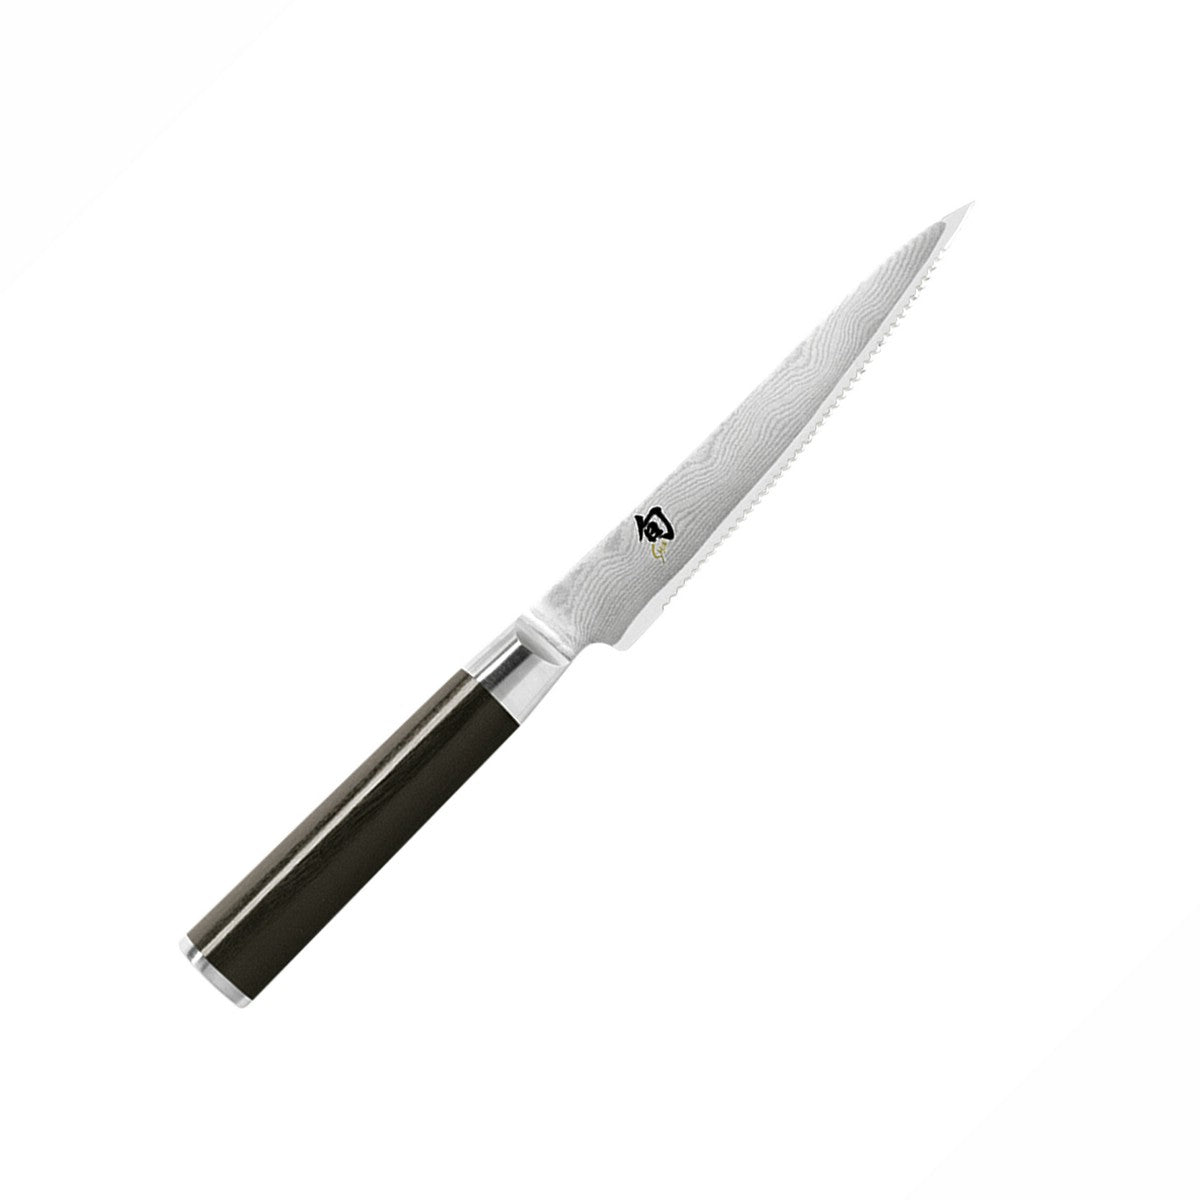 Shun Classic 6 inch Utility Knife